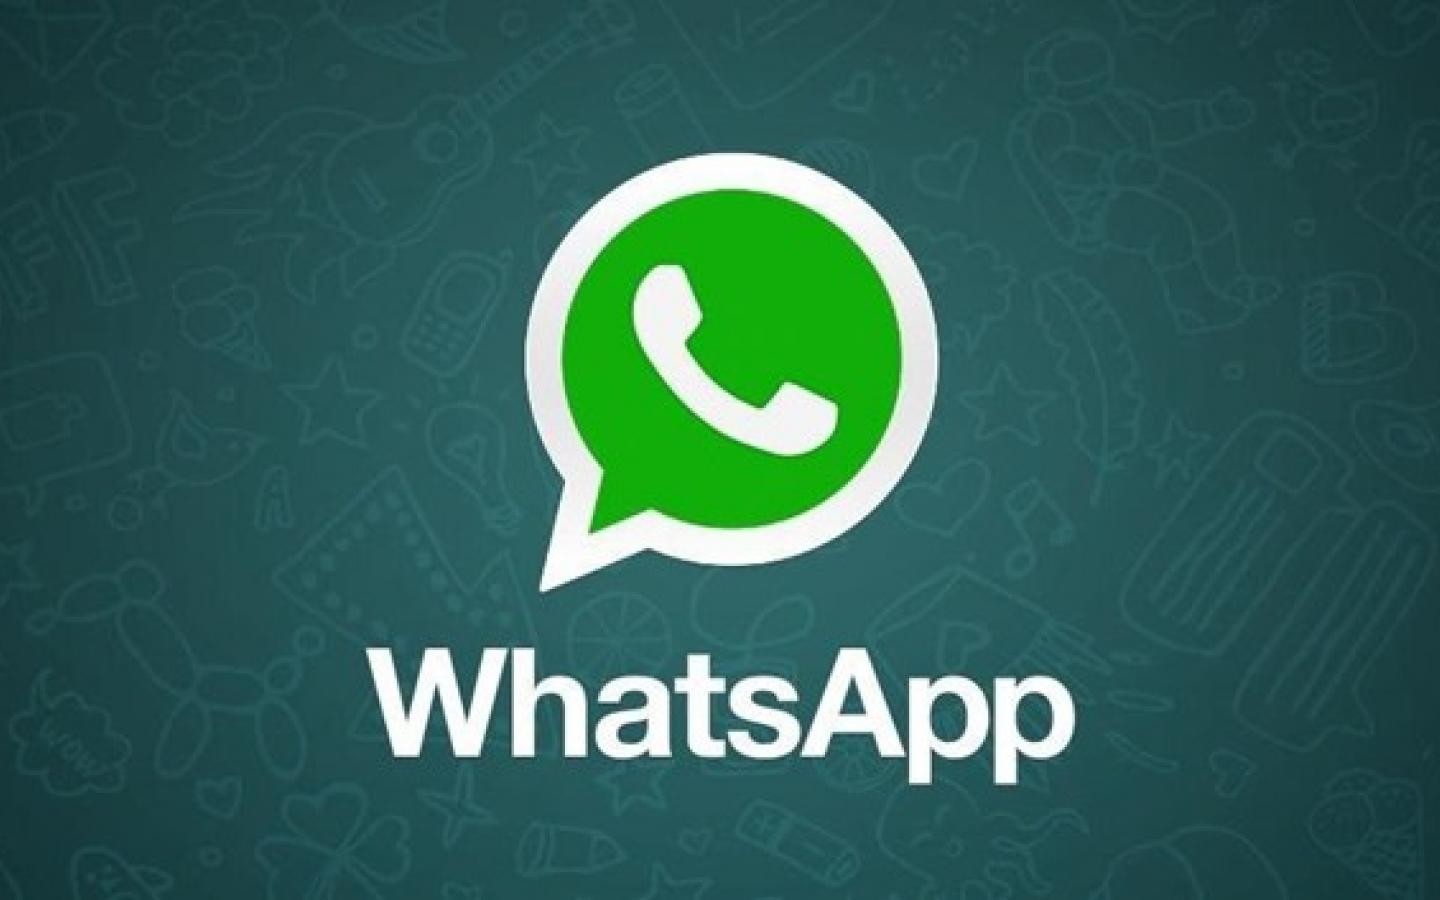 WhatsApp Latest 3 New Features Updates 2020 Self Destructing, Password Protection, and Auto-Download हिंदी में पढ़े पूरी जानकारी, व्हाट्सएप का नया अपडेट 2020